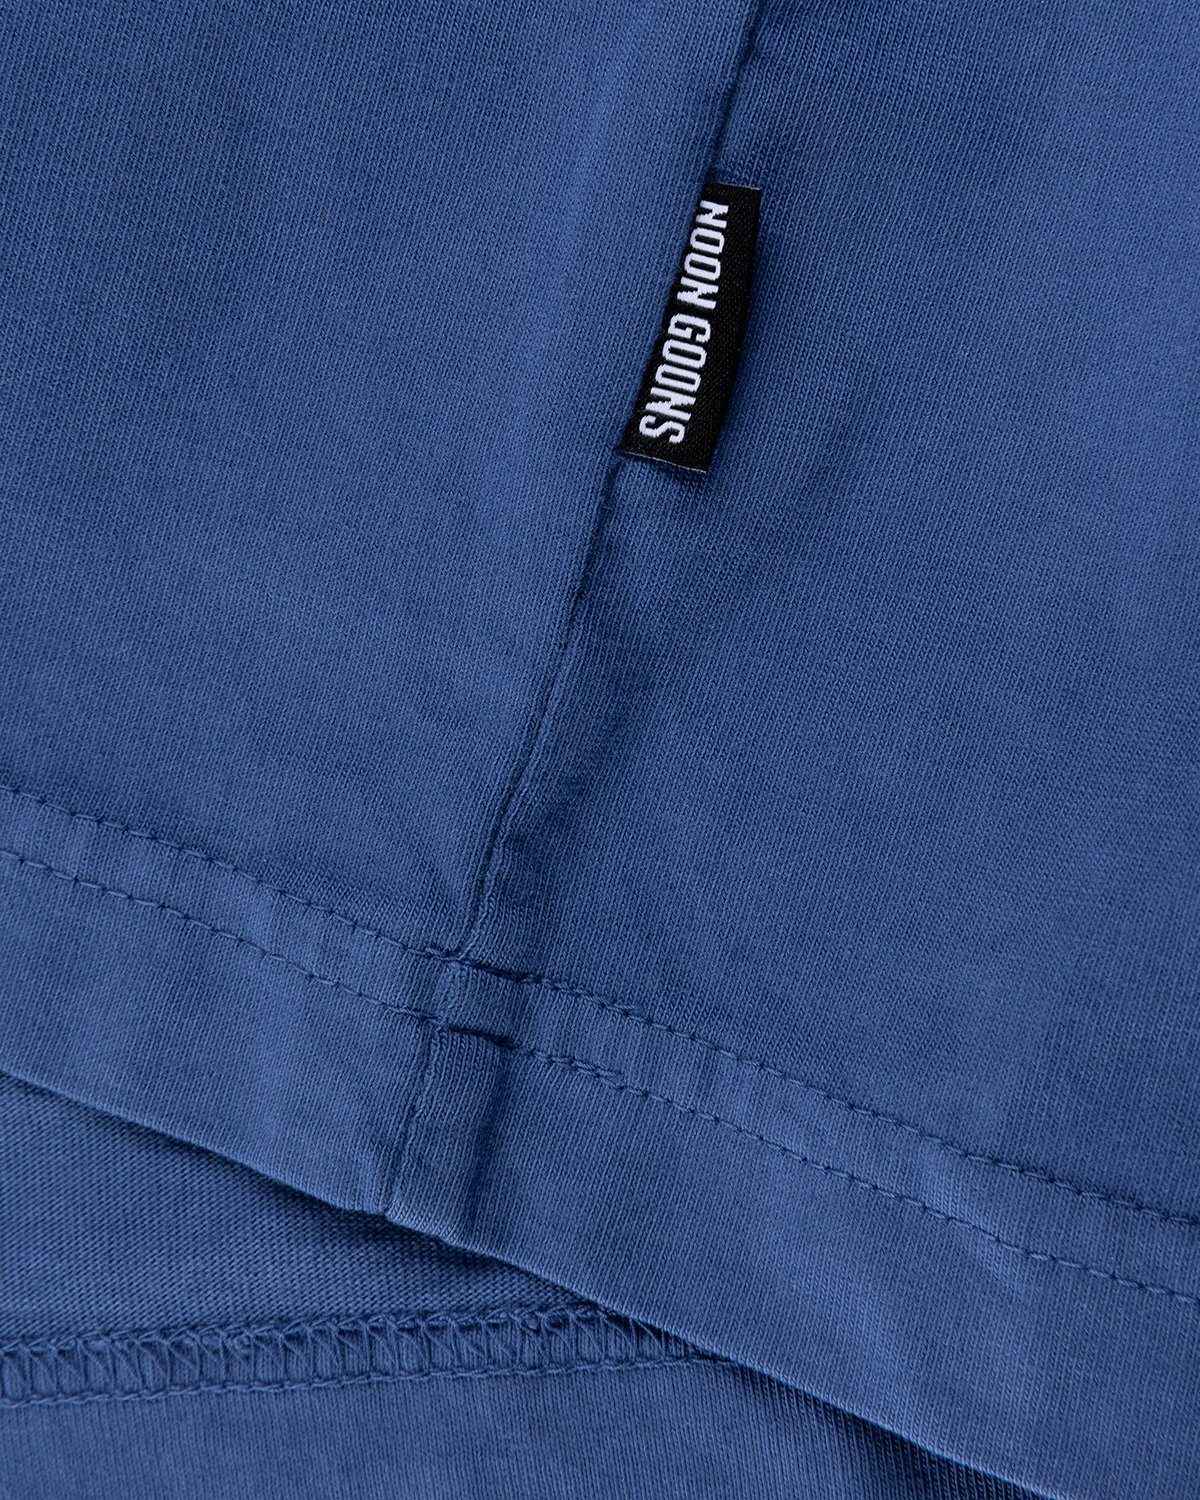 Noon Goons - My Block Tshirt Navy - Clothing - Blue - Image 4